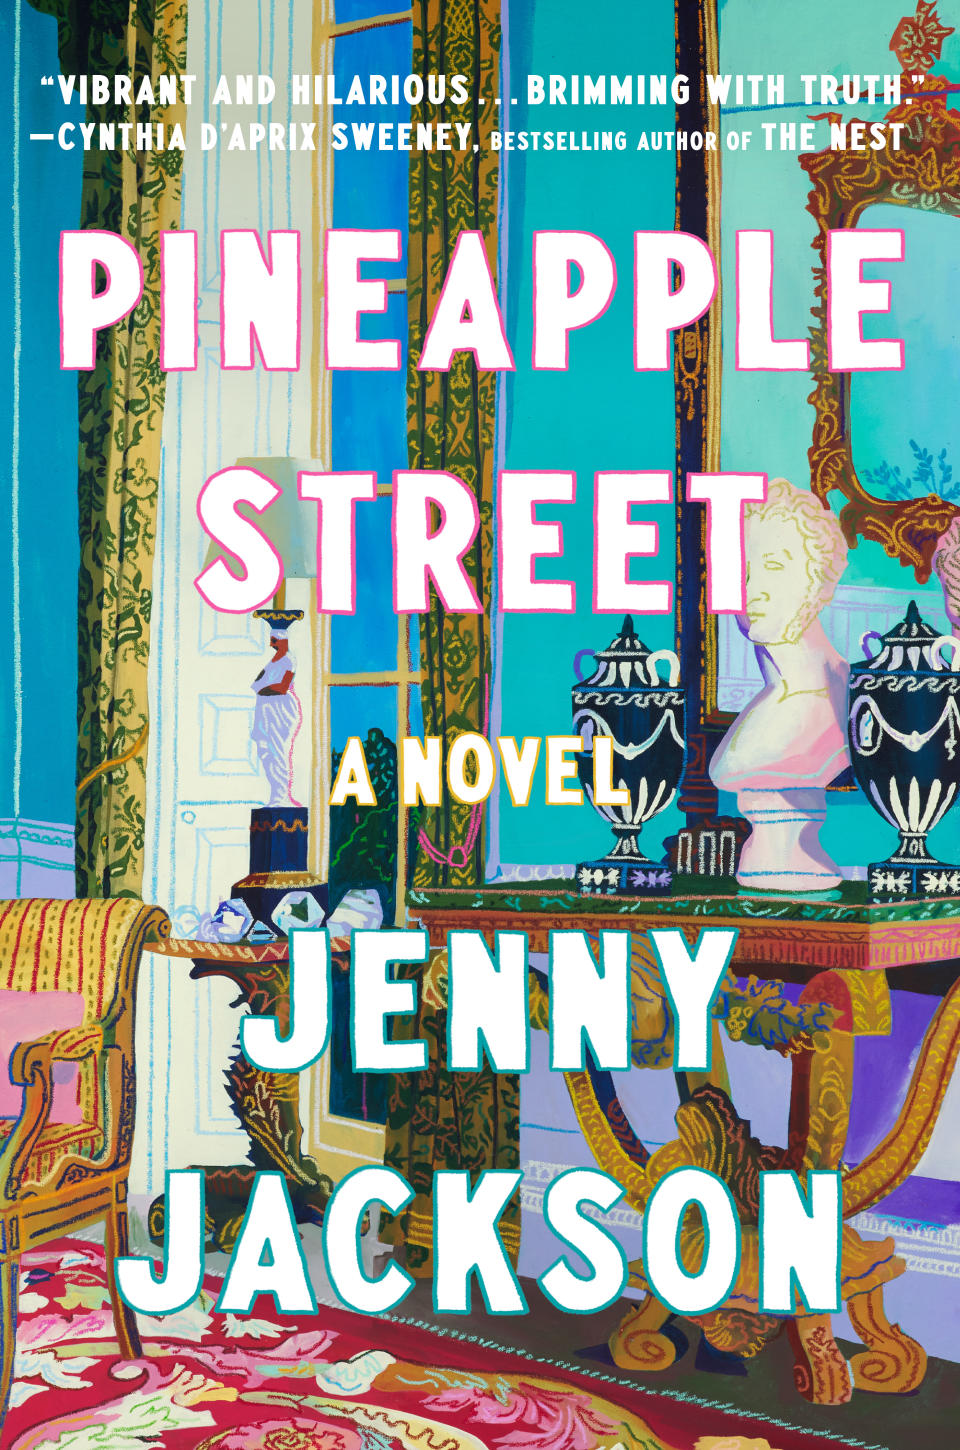 'Pineapple Street' by Jenny Jackson